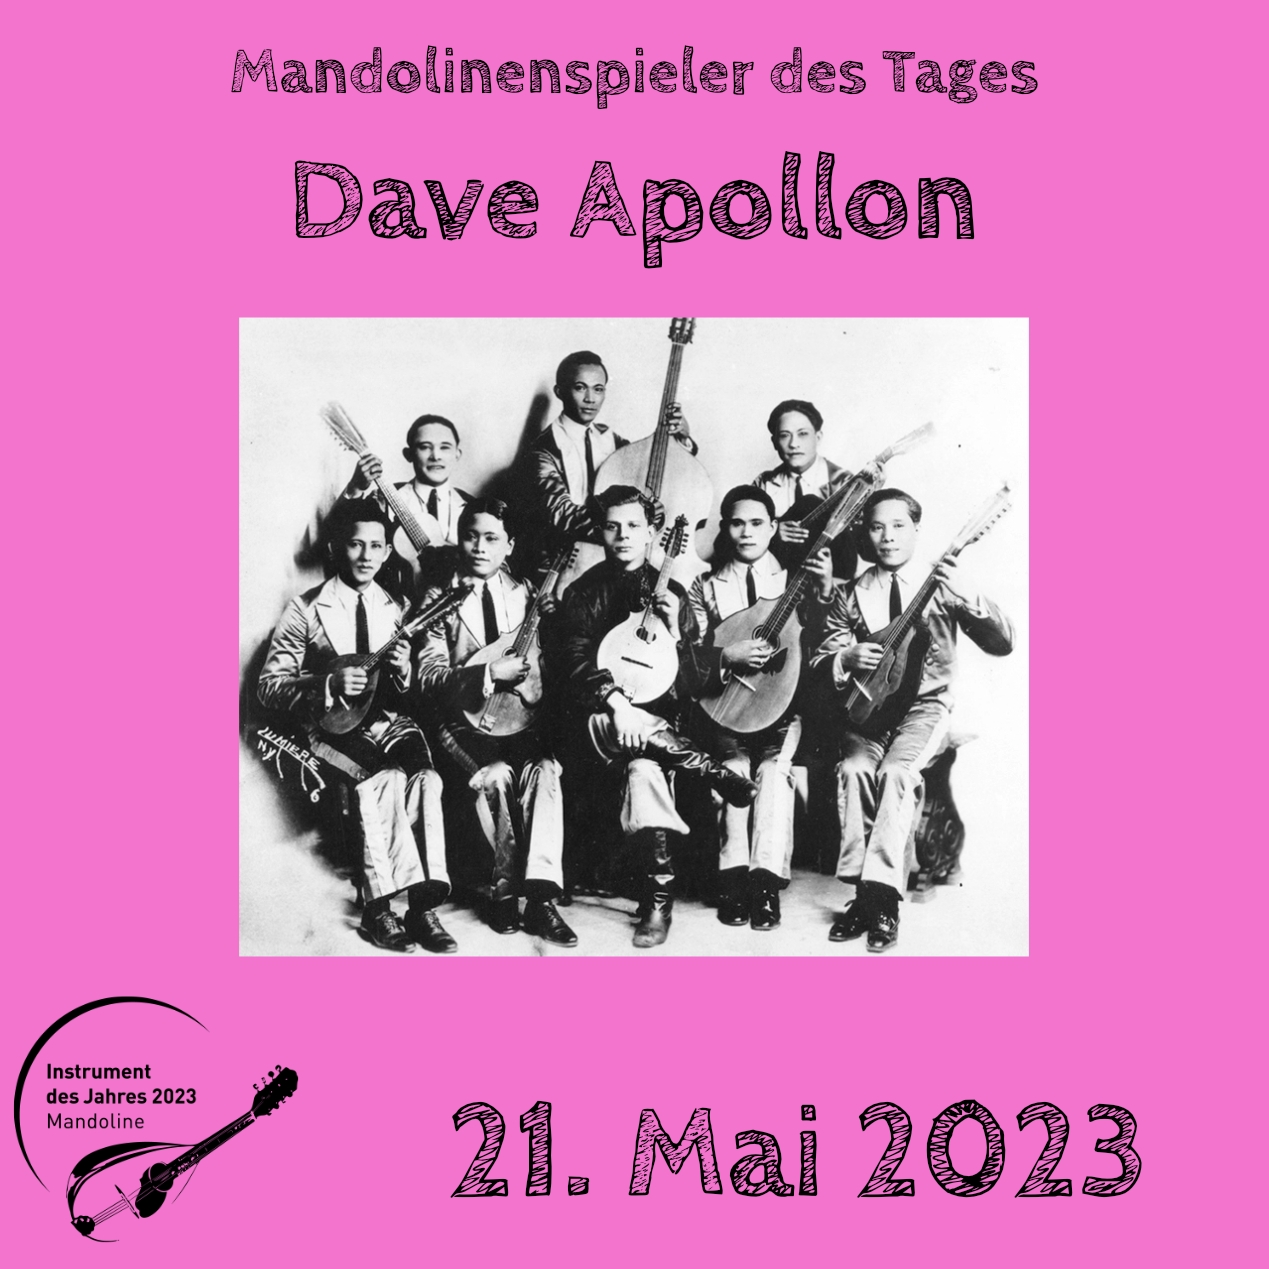 Dave Apollon Mandoline Instrument des Jahres 2023 Mandolinenspieler Mandolinenspielerin des Tages